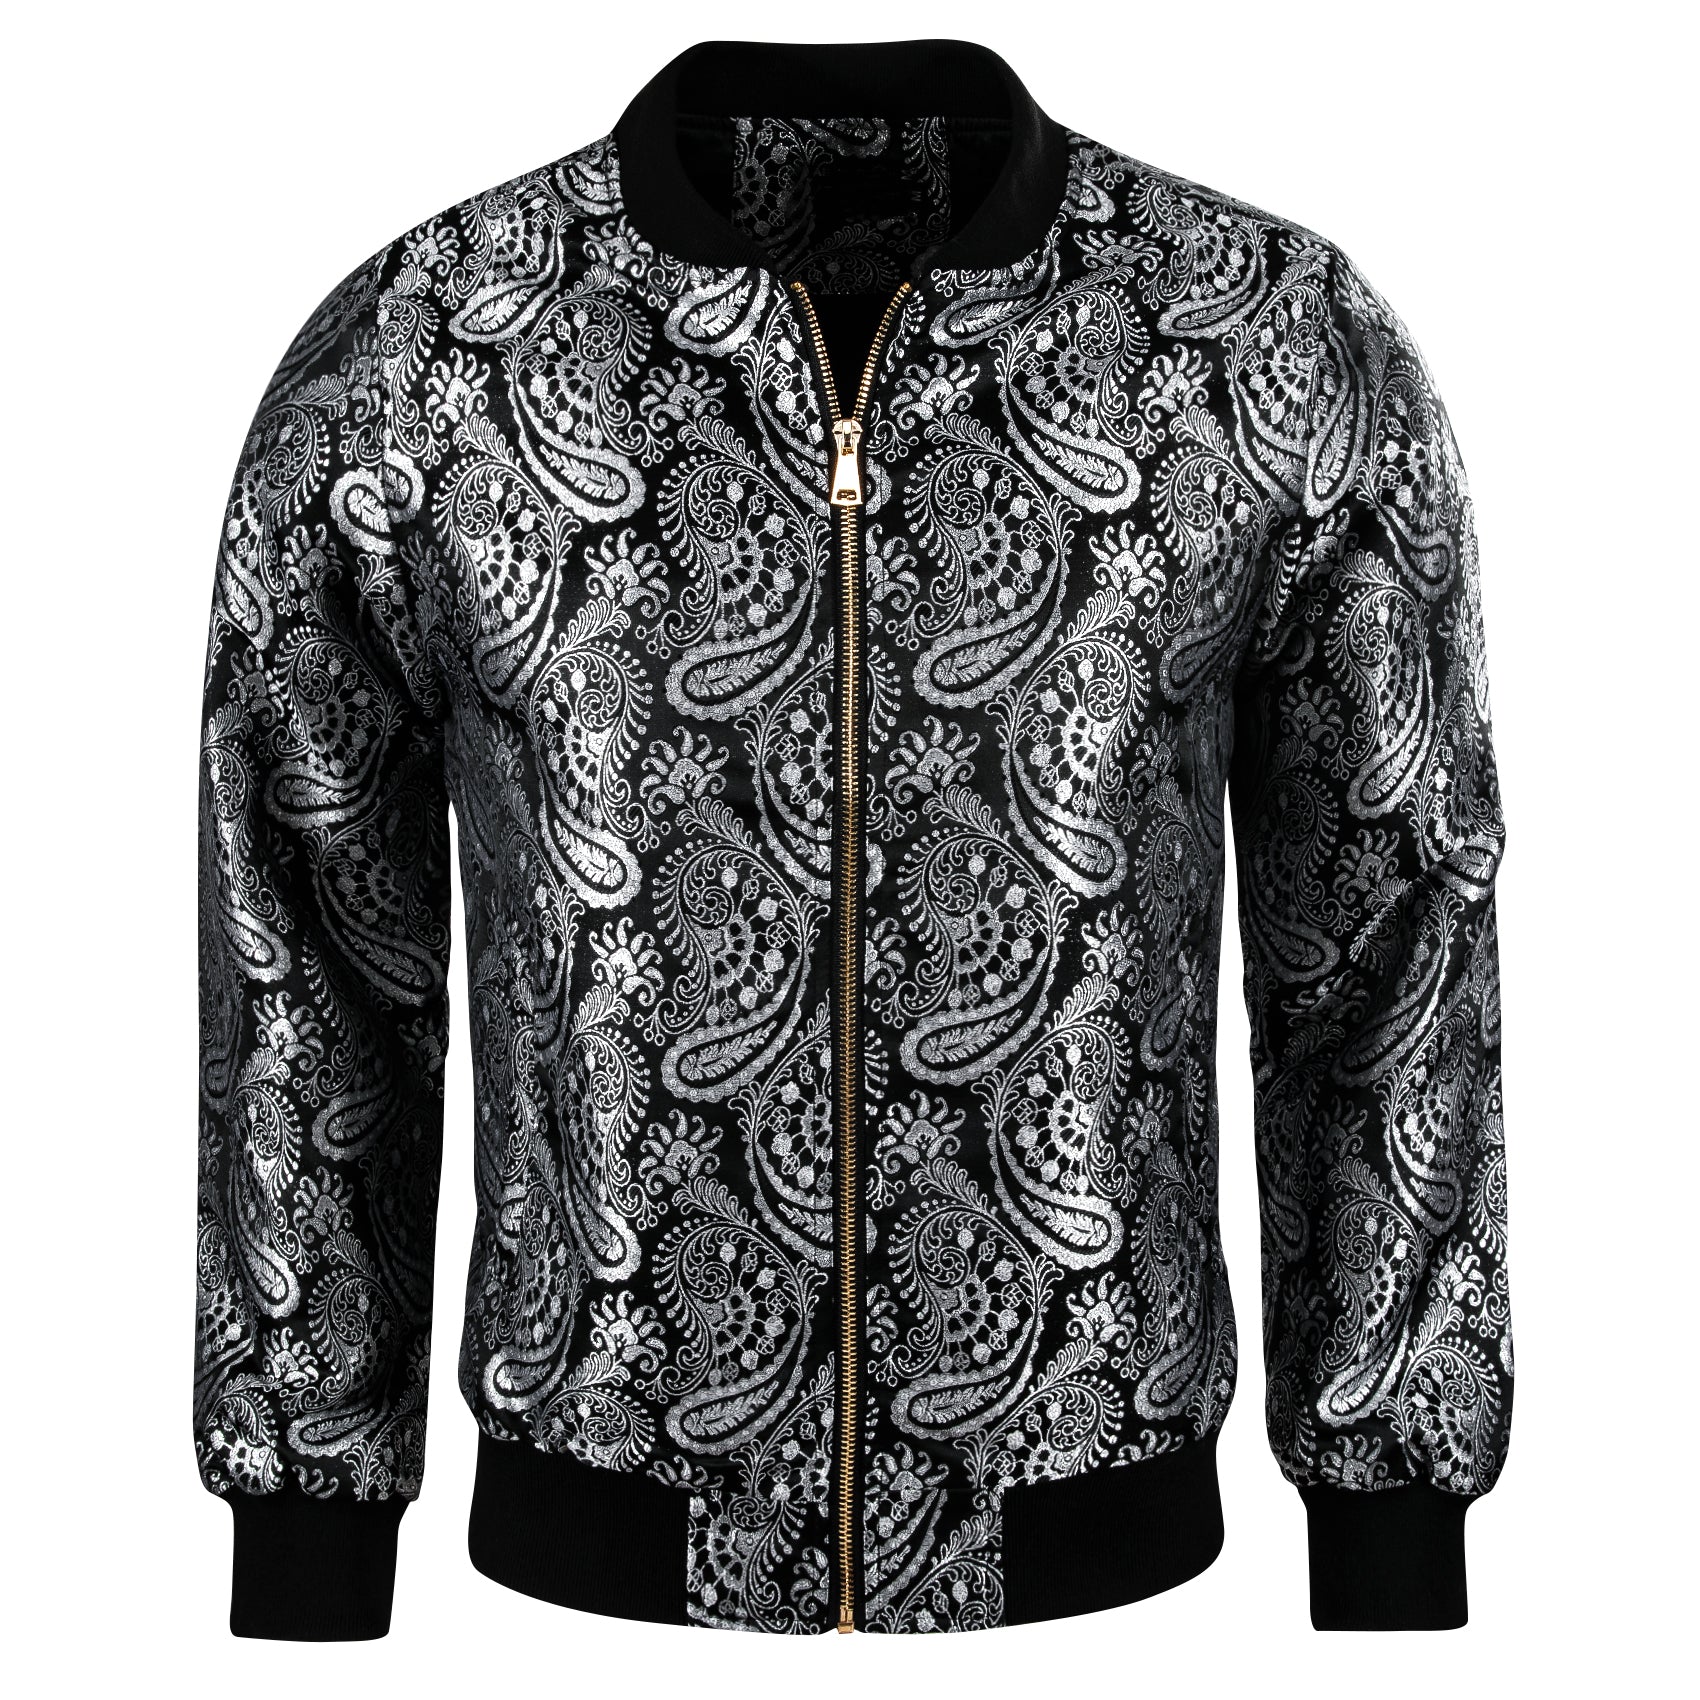 Barry.wang Zipper Jacket Black Silver Floral Jacquard Paisley Jacket for Men